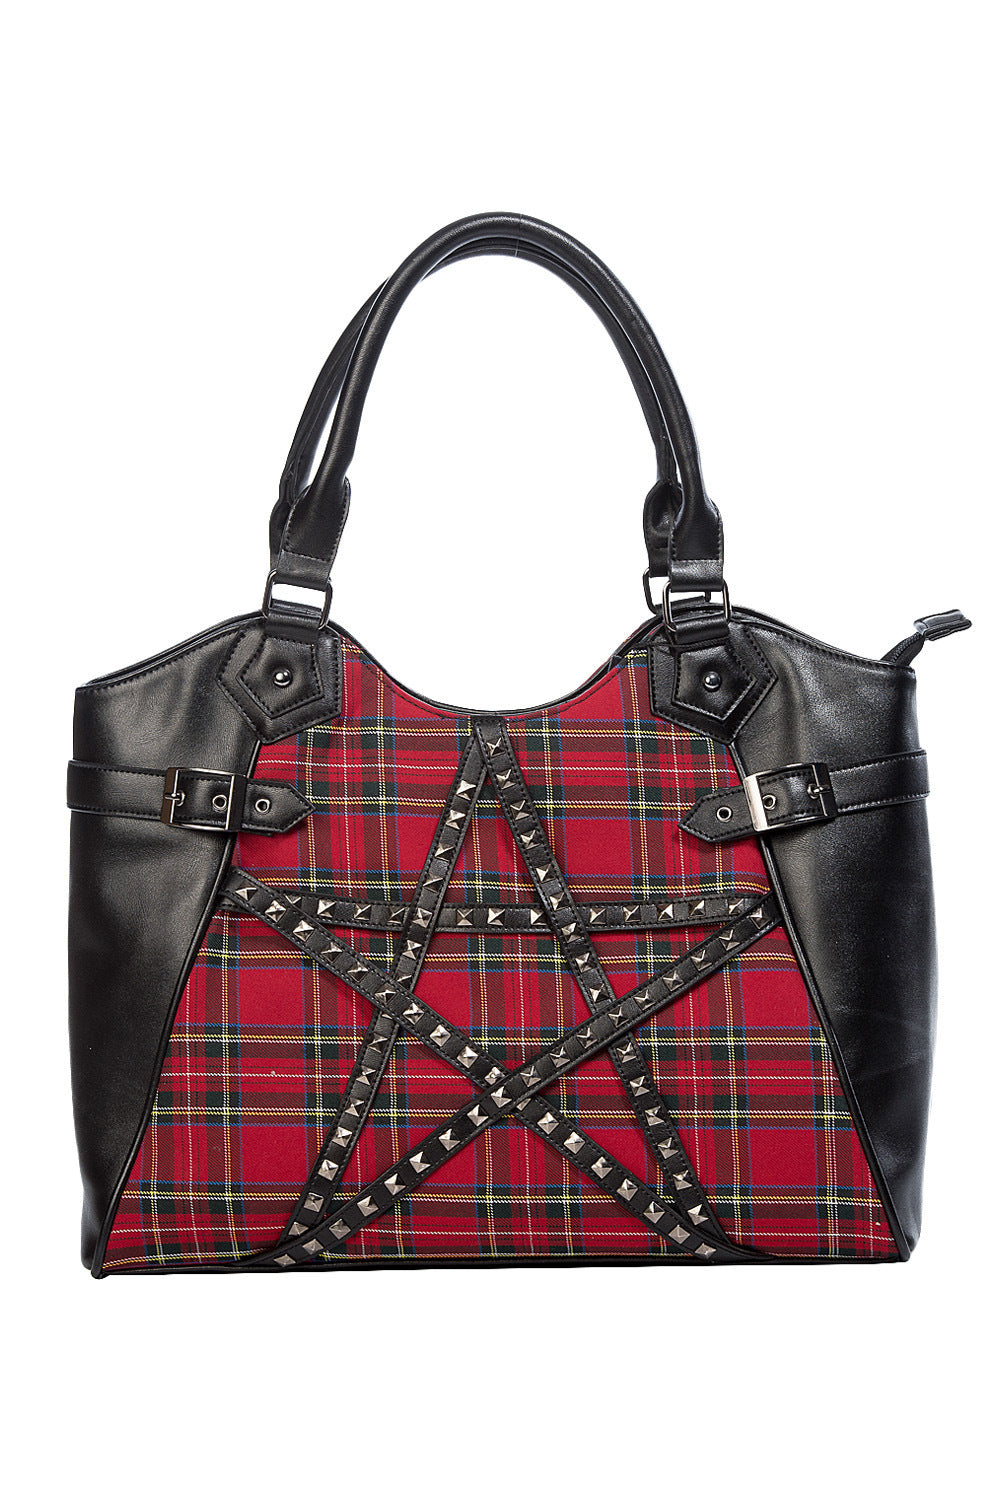 Black handbag with studded pentagram front with red tartan 